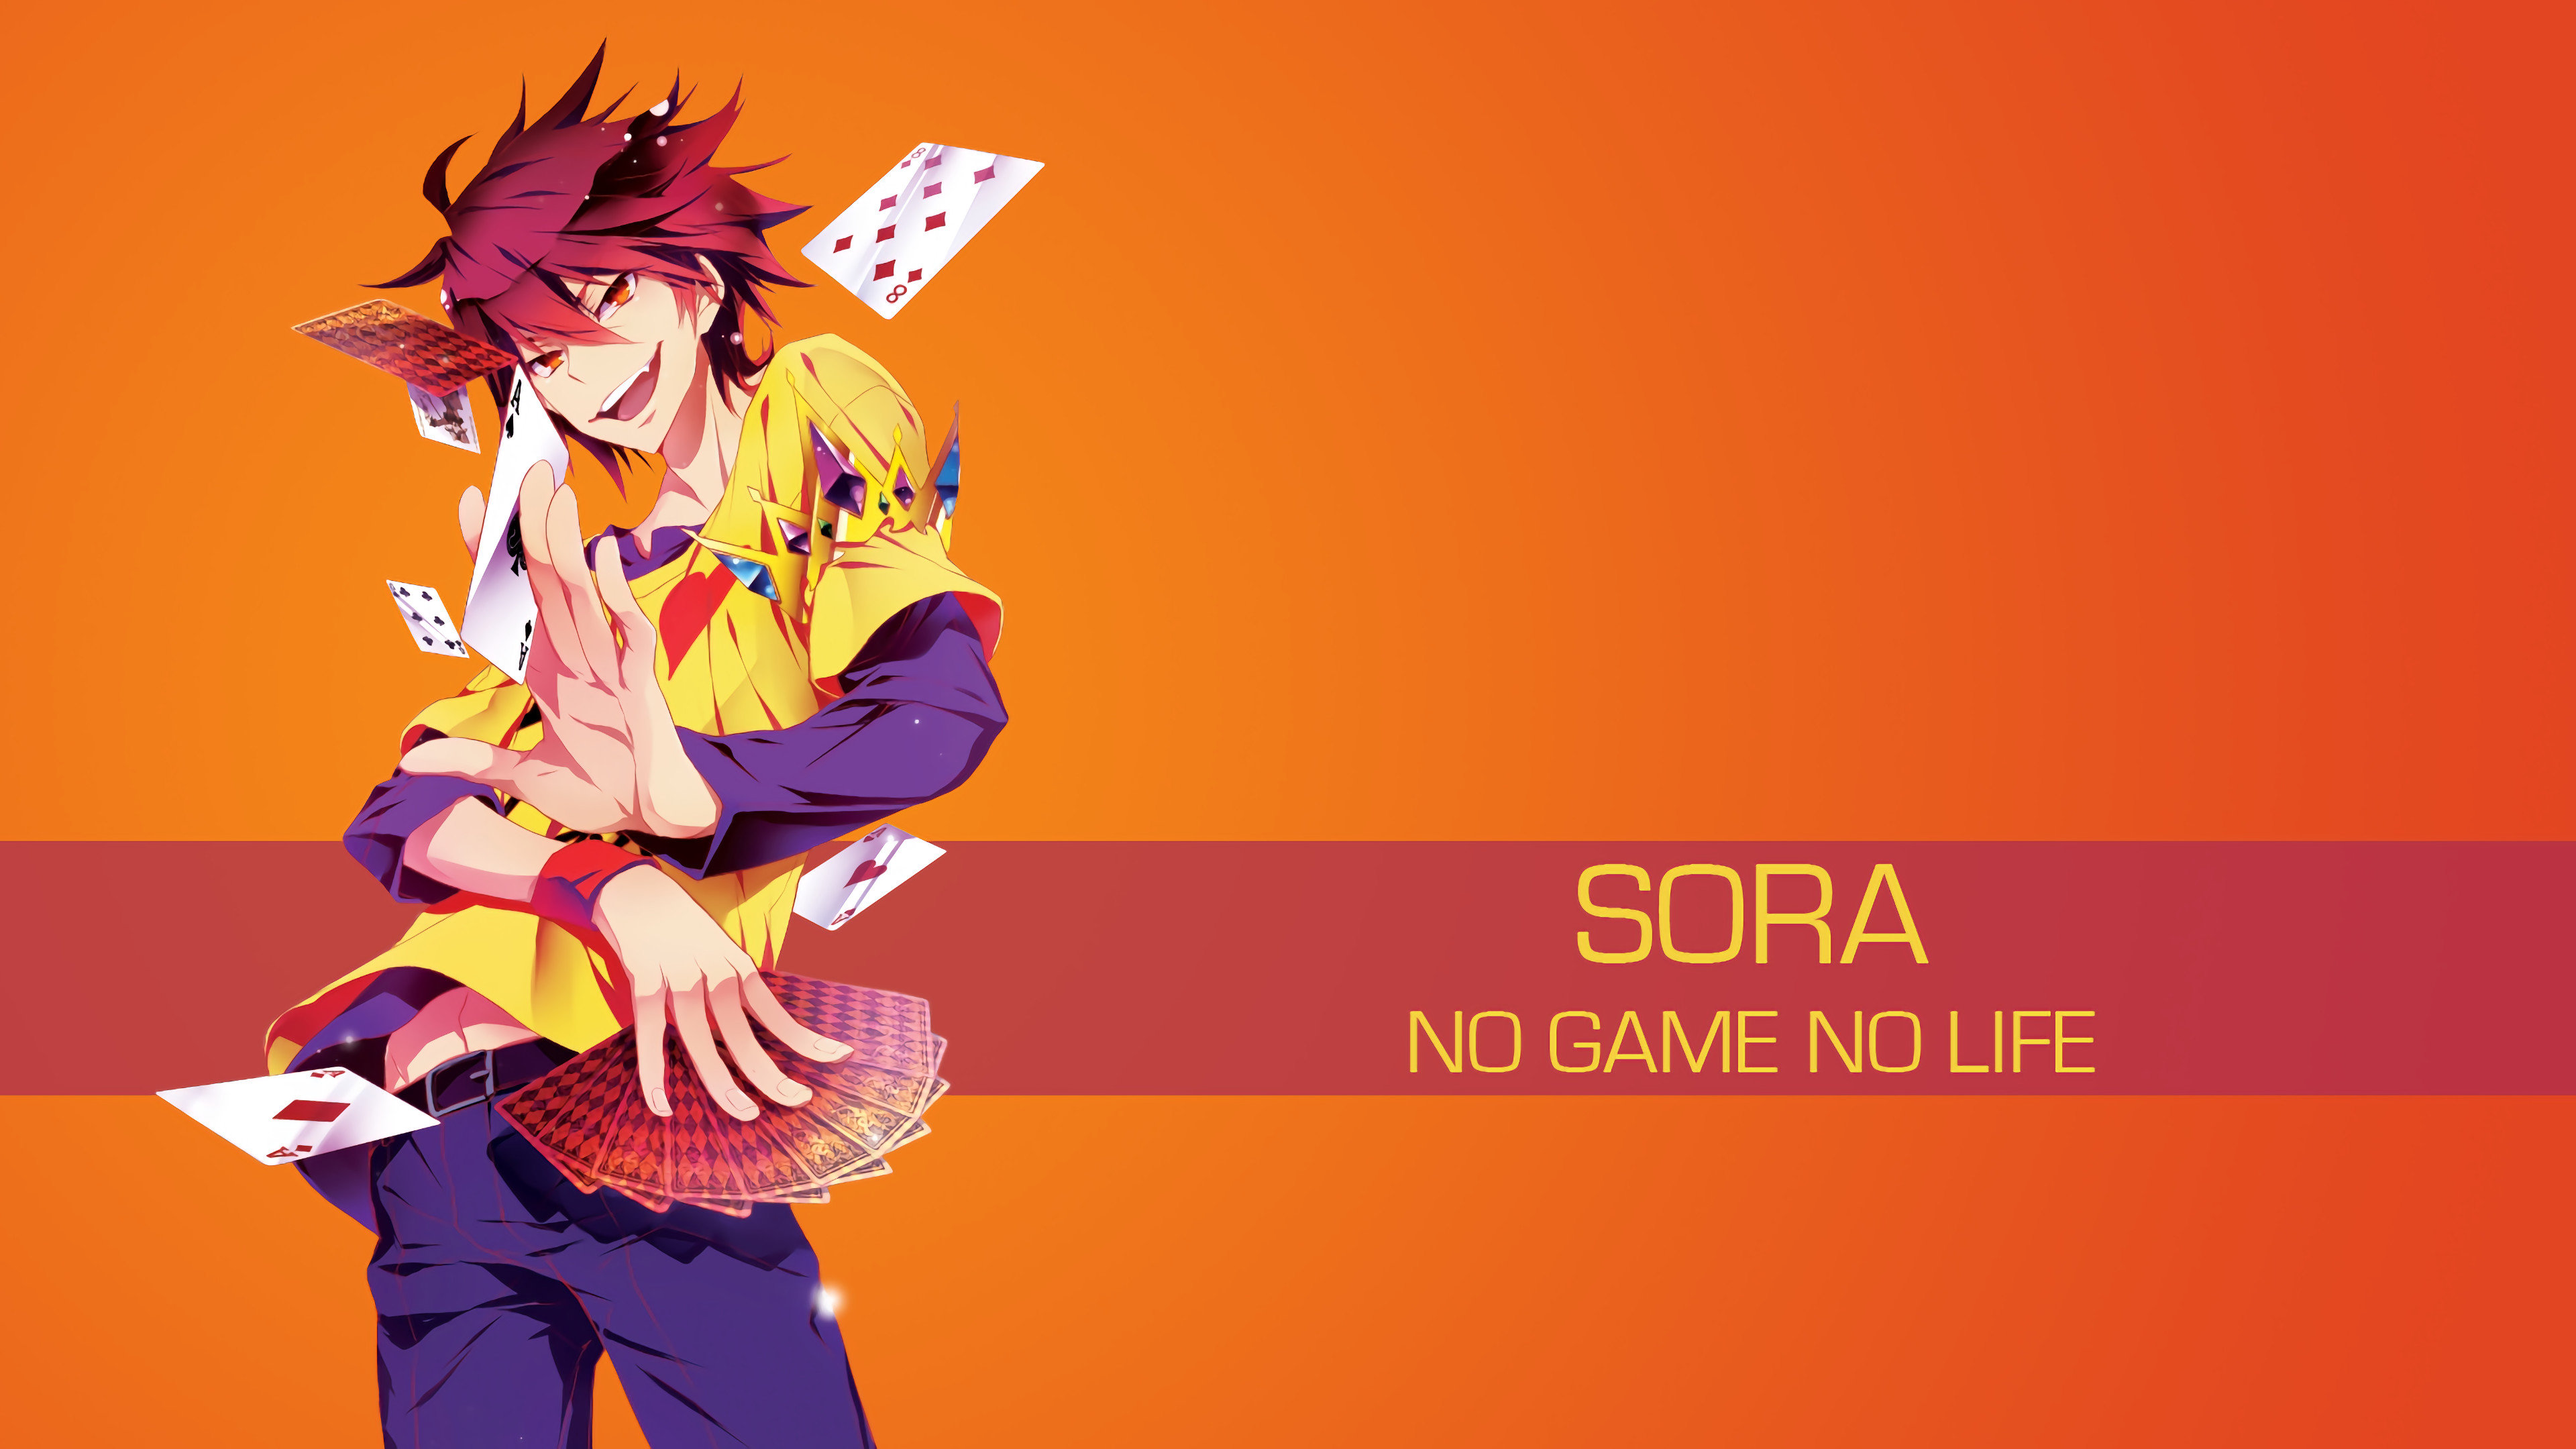 Sora No Game No Life Wallpapers Hd For Desktop Backgrounds